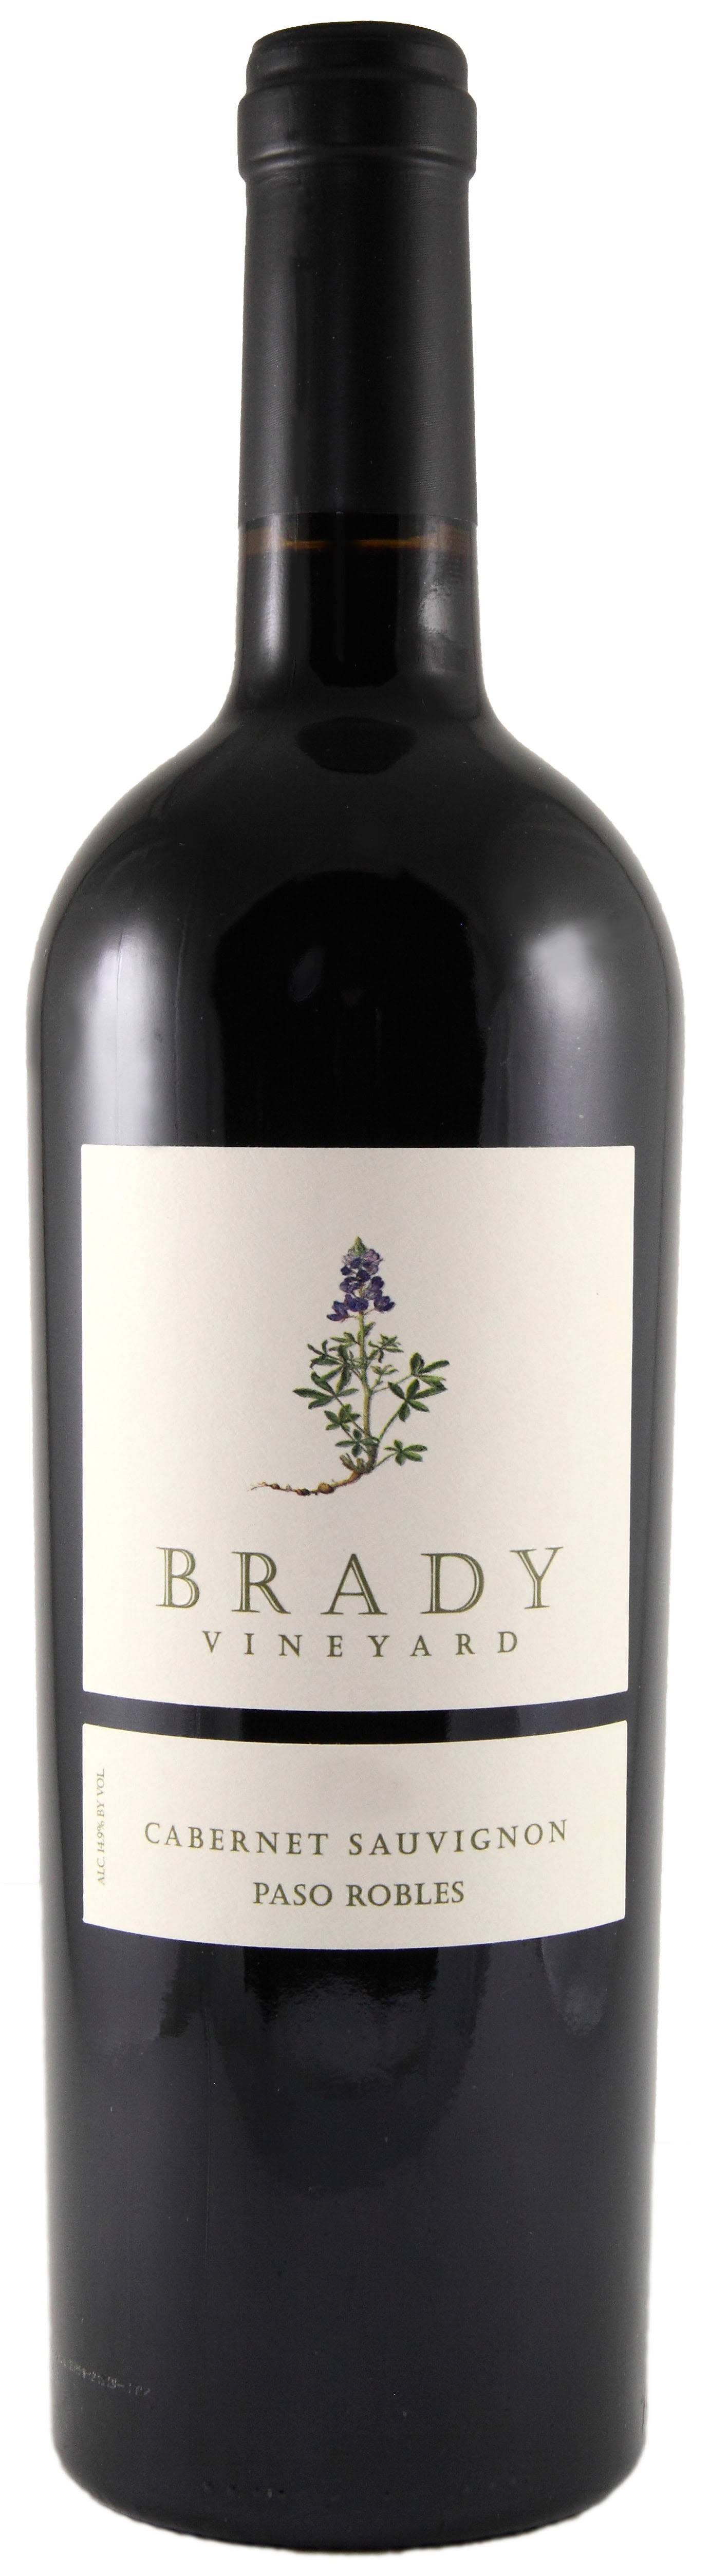 Brady Vineyard Cabernet Sauvignon, Paso Robles, 2011 - 750 ml